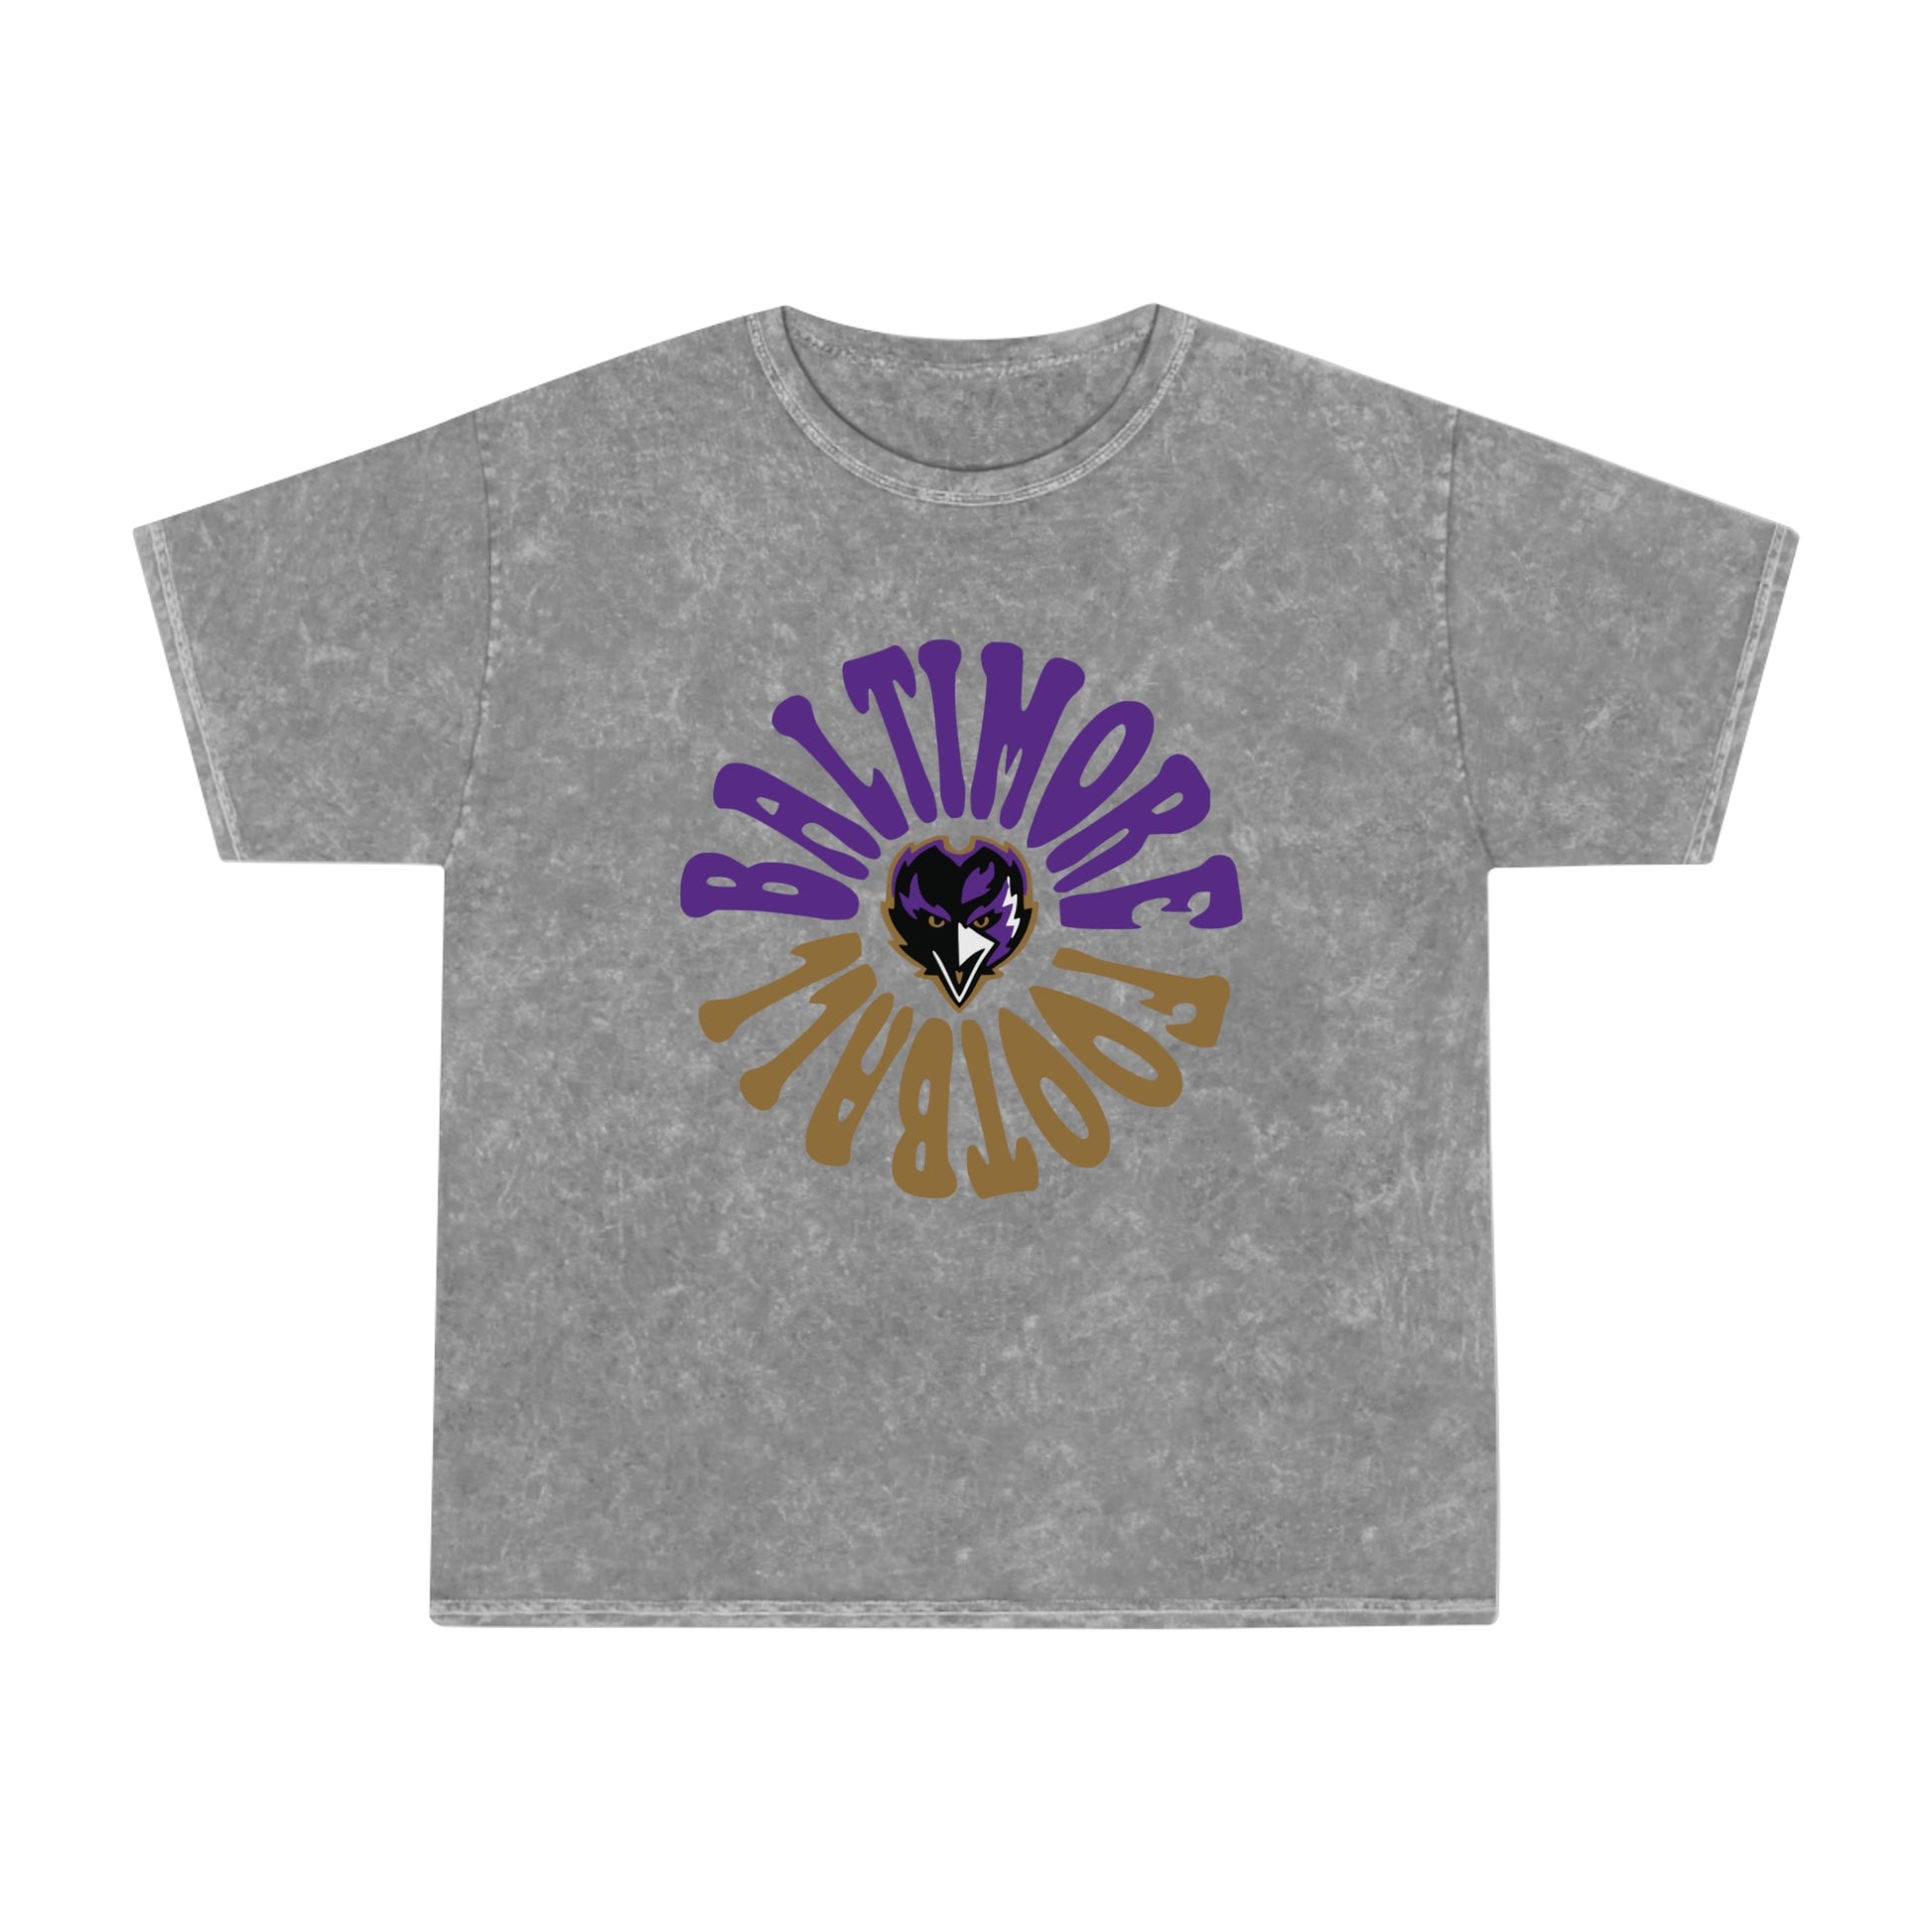 Tie Dye Baltimore Ravens T-Shirt - Hippy Short Sleeve Acid Wash Tee - Rock N' Roll Men's & Women's Unisex Mineral Wash T-Shirt - Design 2